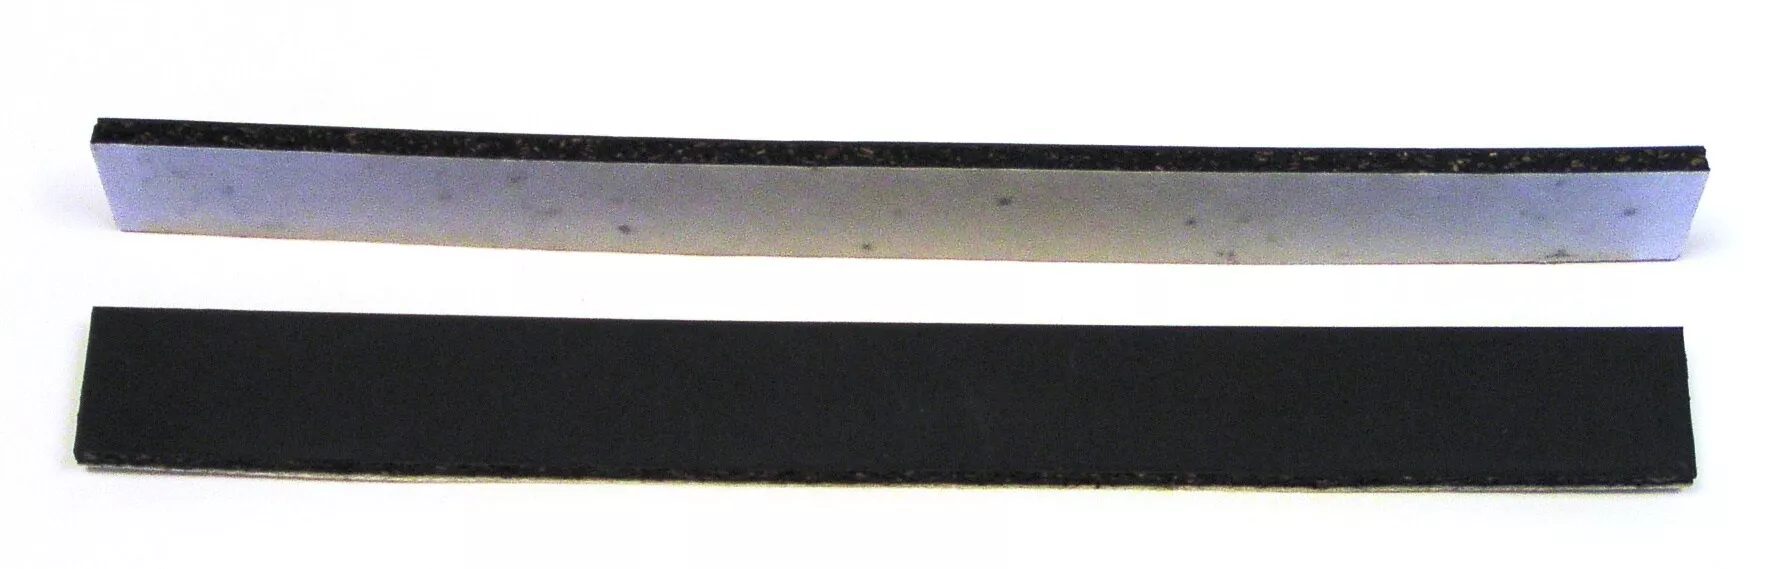 SKU 7000045267 | 3M™ File Belt Sander Platen Pad Material 28380